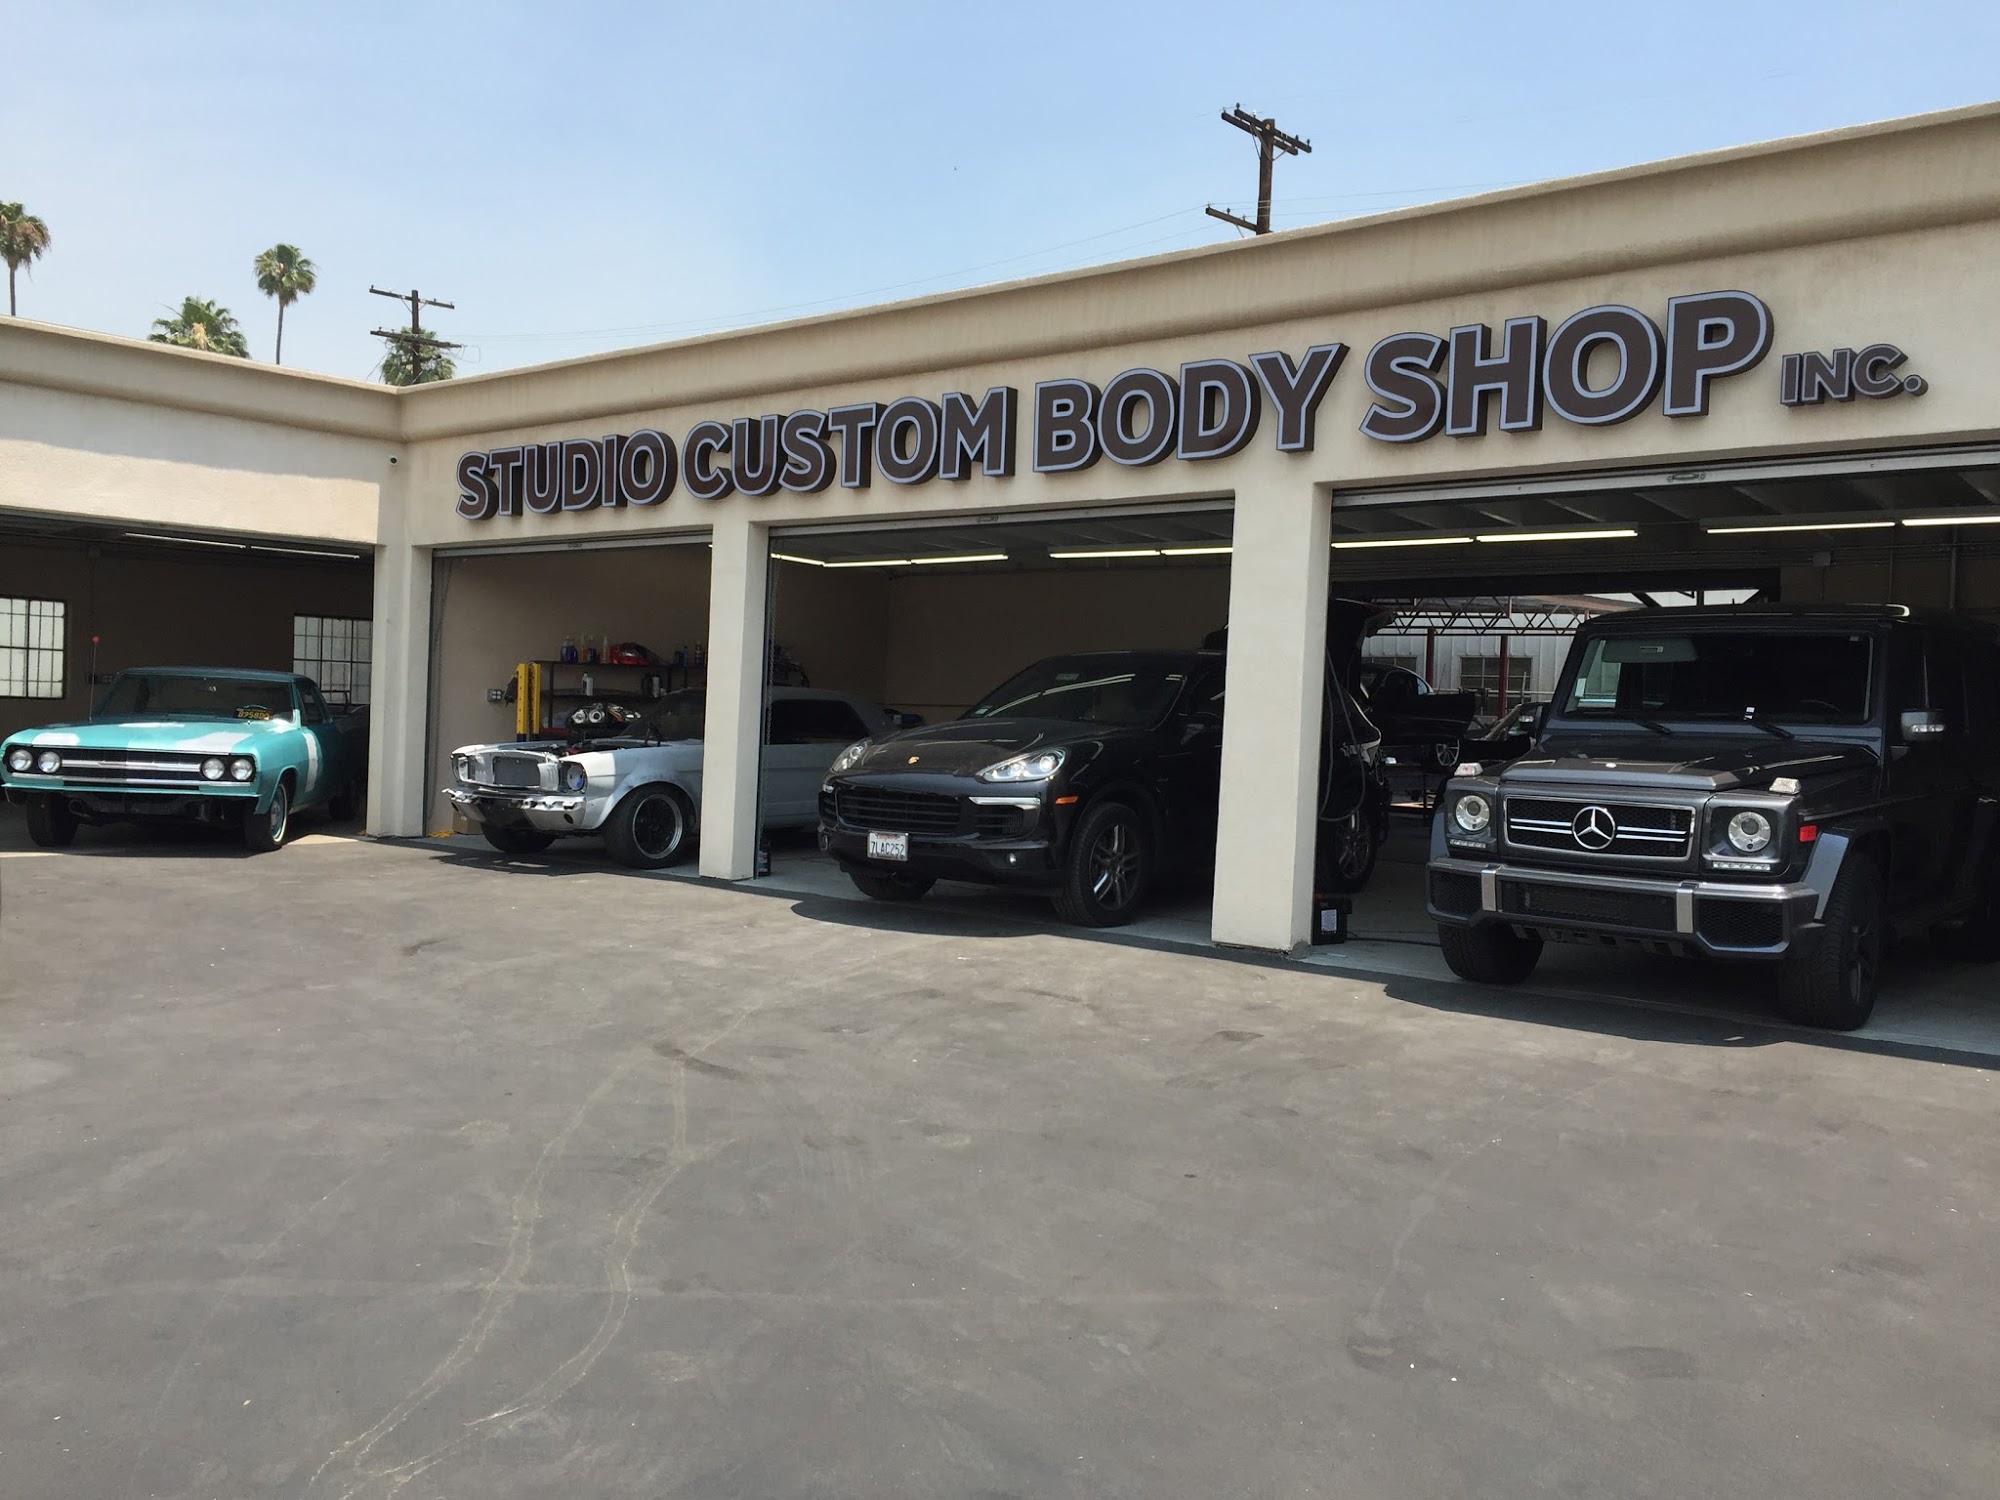 Studio Custom Body Shop